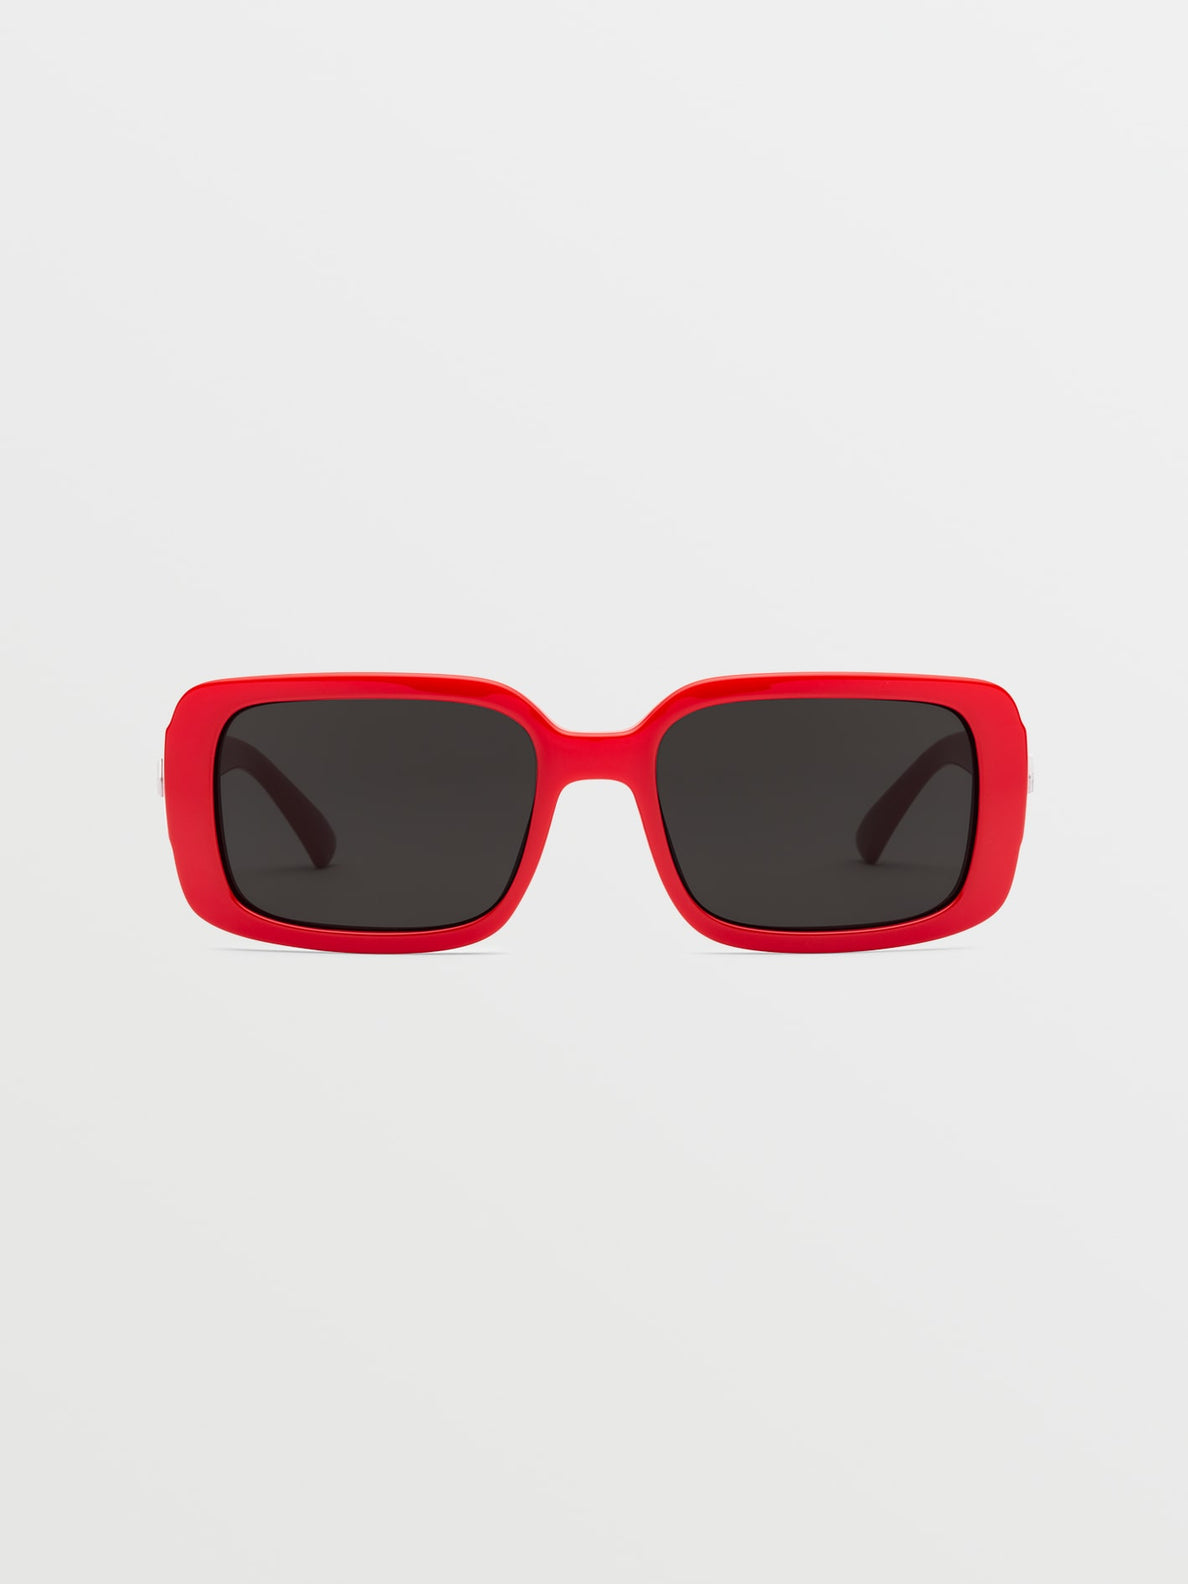 True Sunglasses - Gloss Red/Gray (VE03301301_0000) [F]